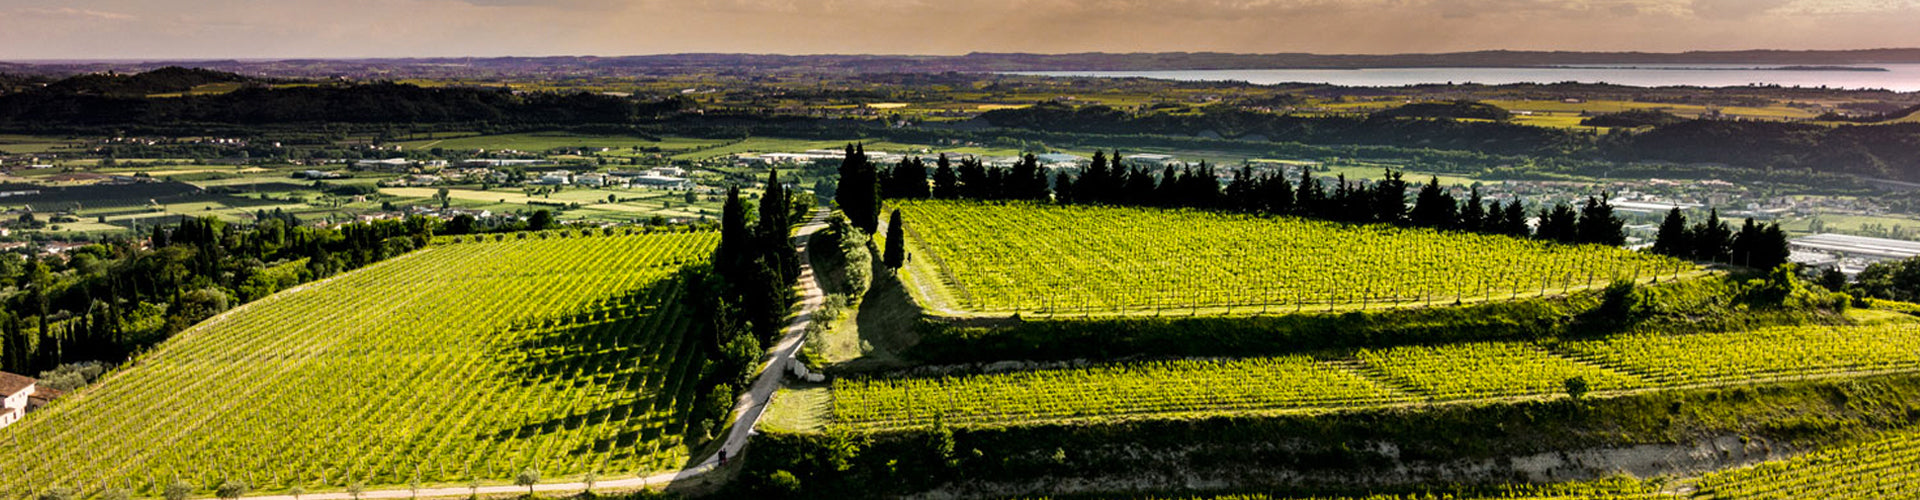 Allegrini La Poja Vineyards in Valpolicella Classico, Italy